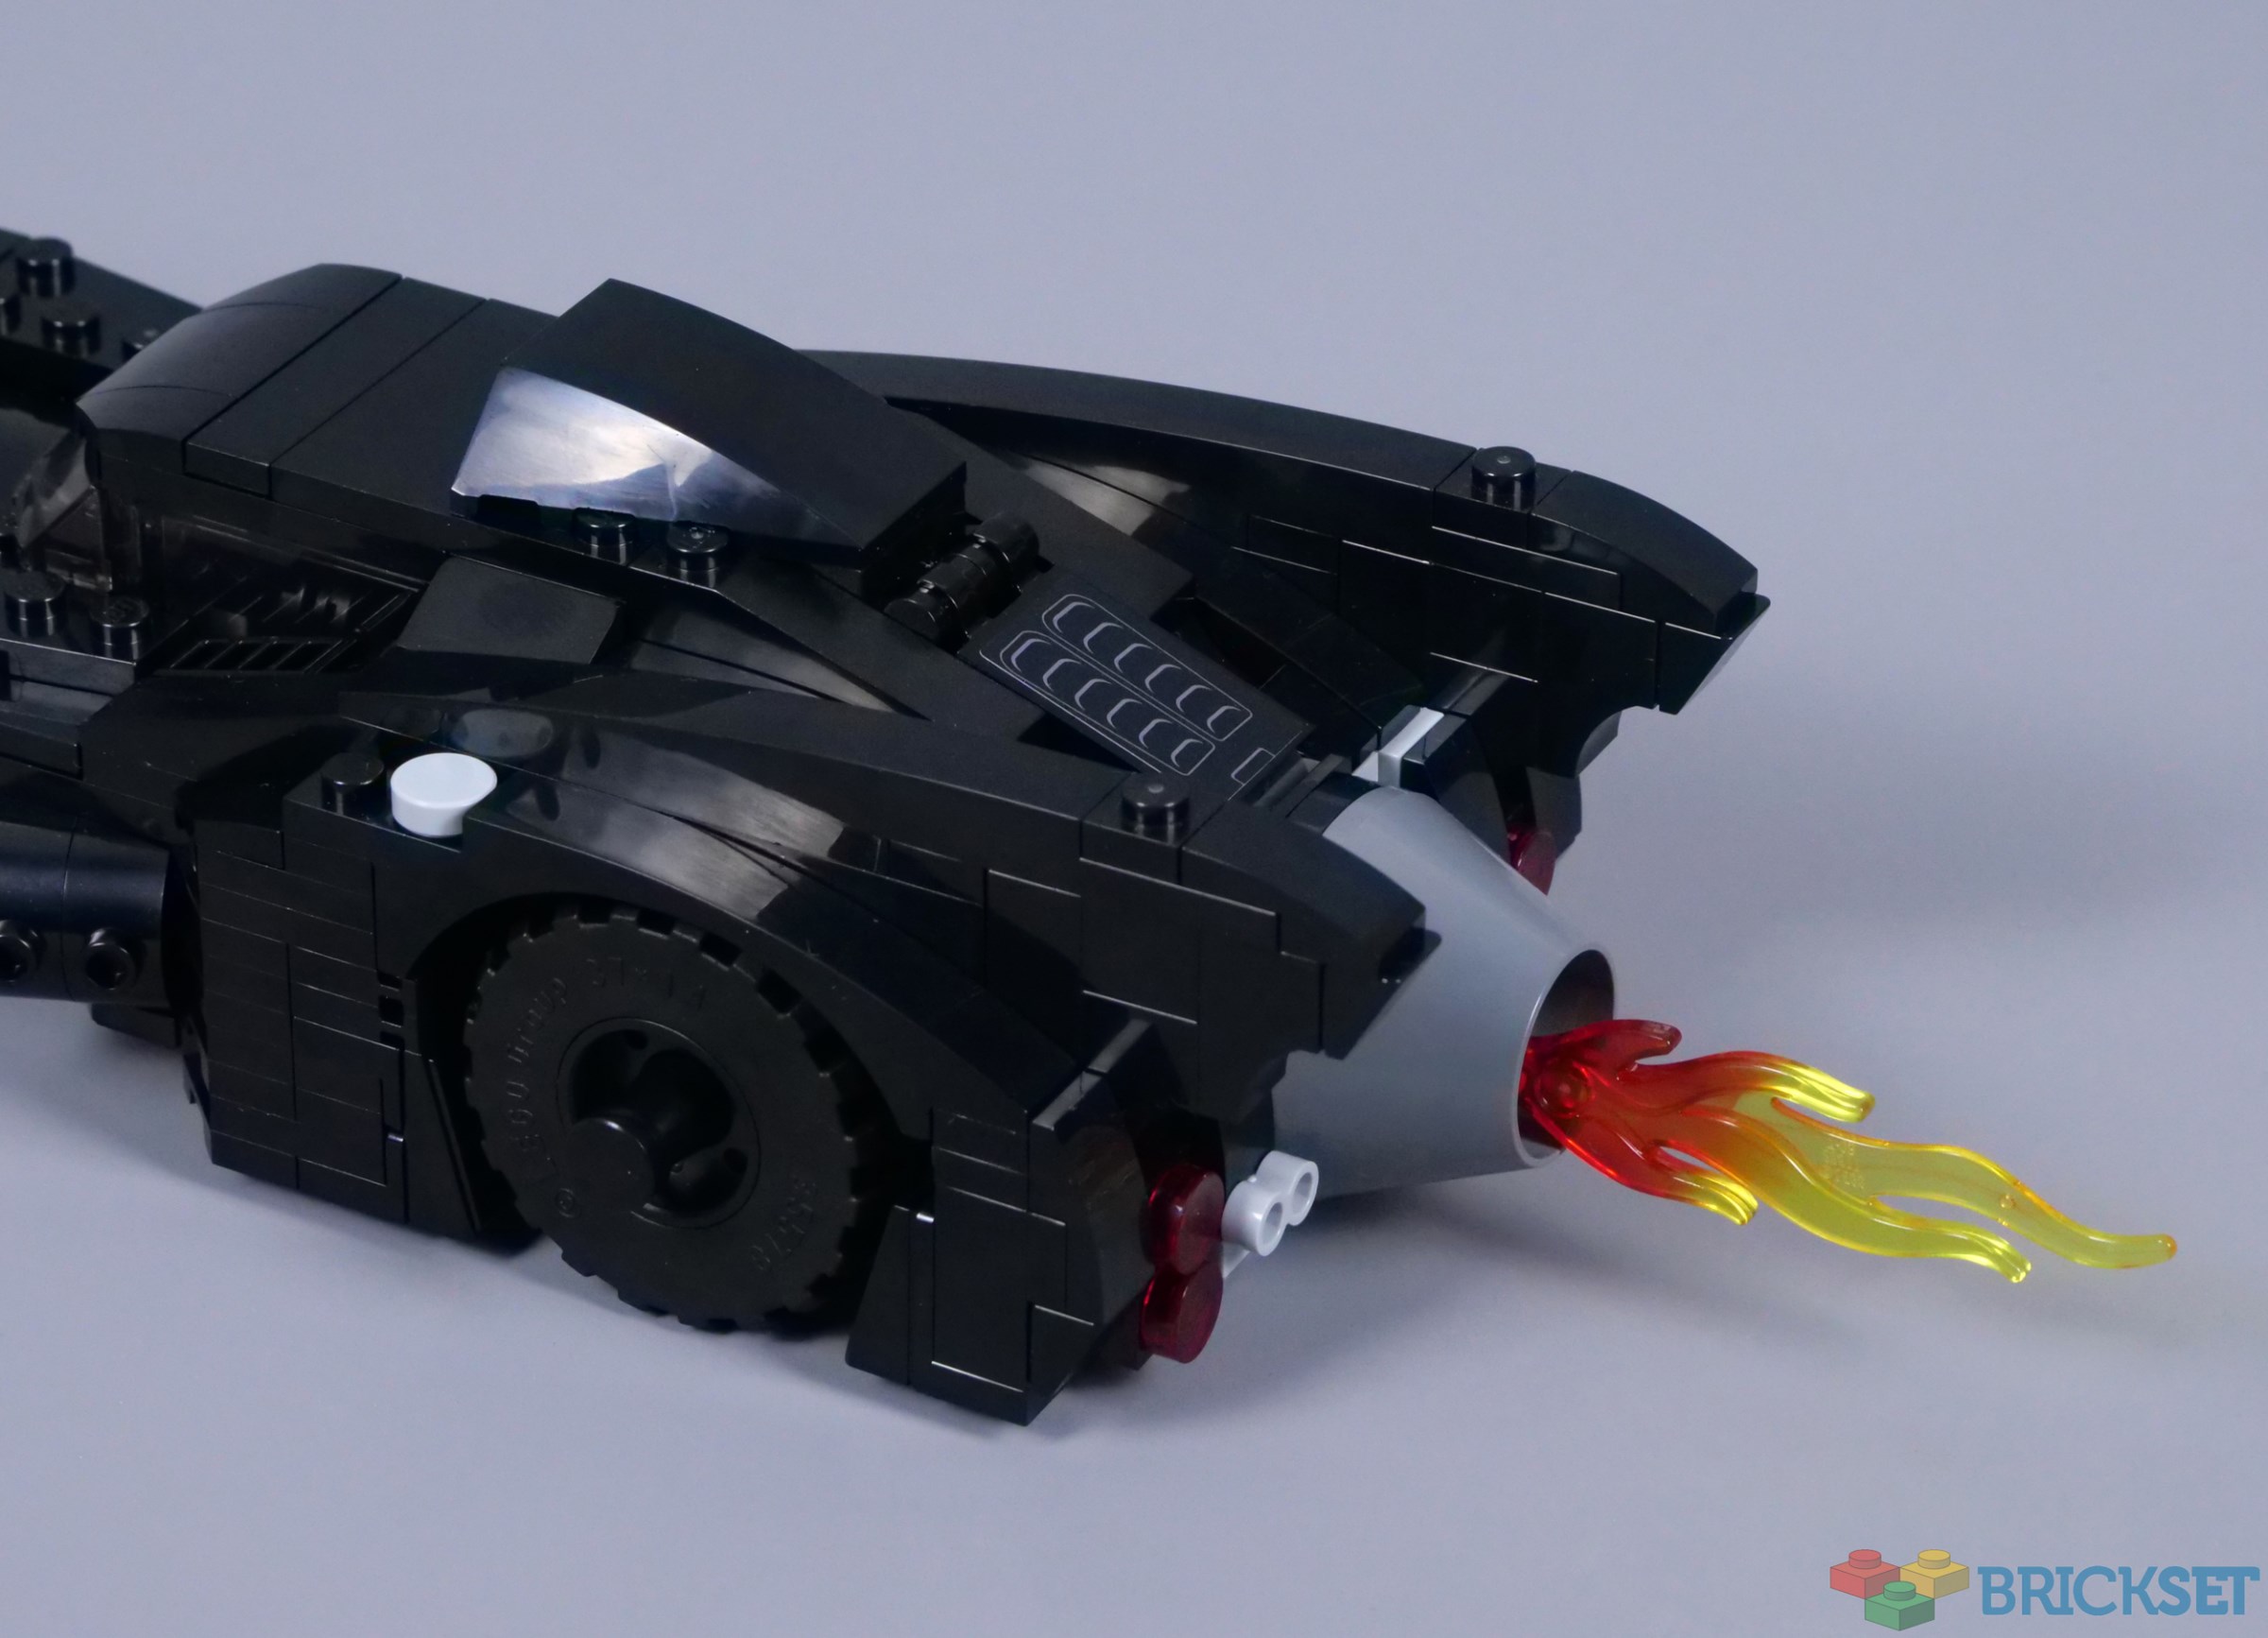 LEGO 76224 Batmobile : Batman vs The Joker Chase révélé